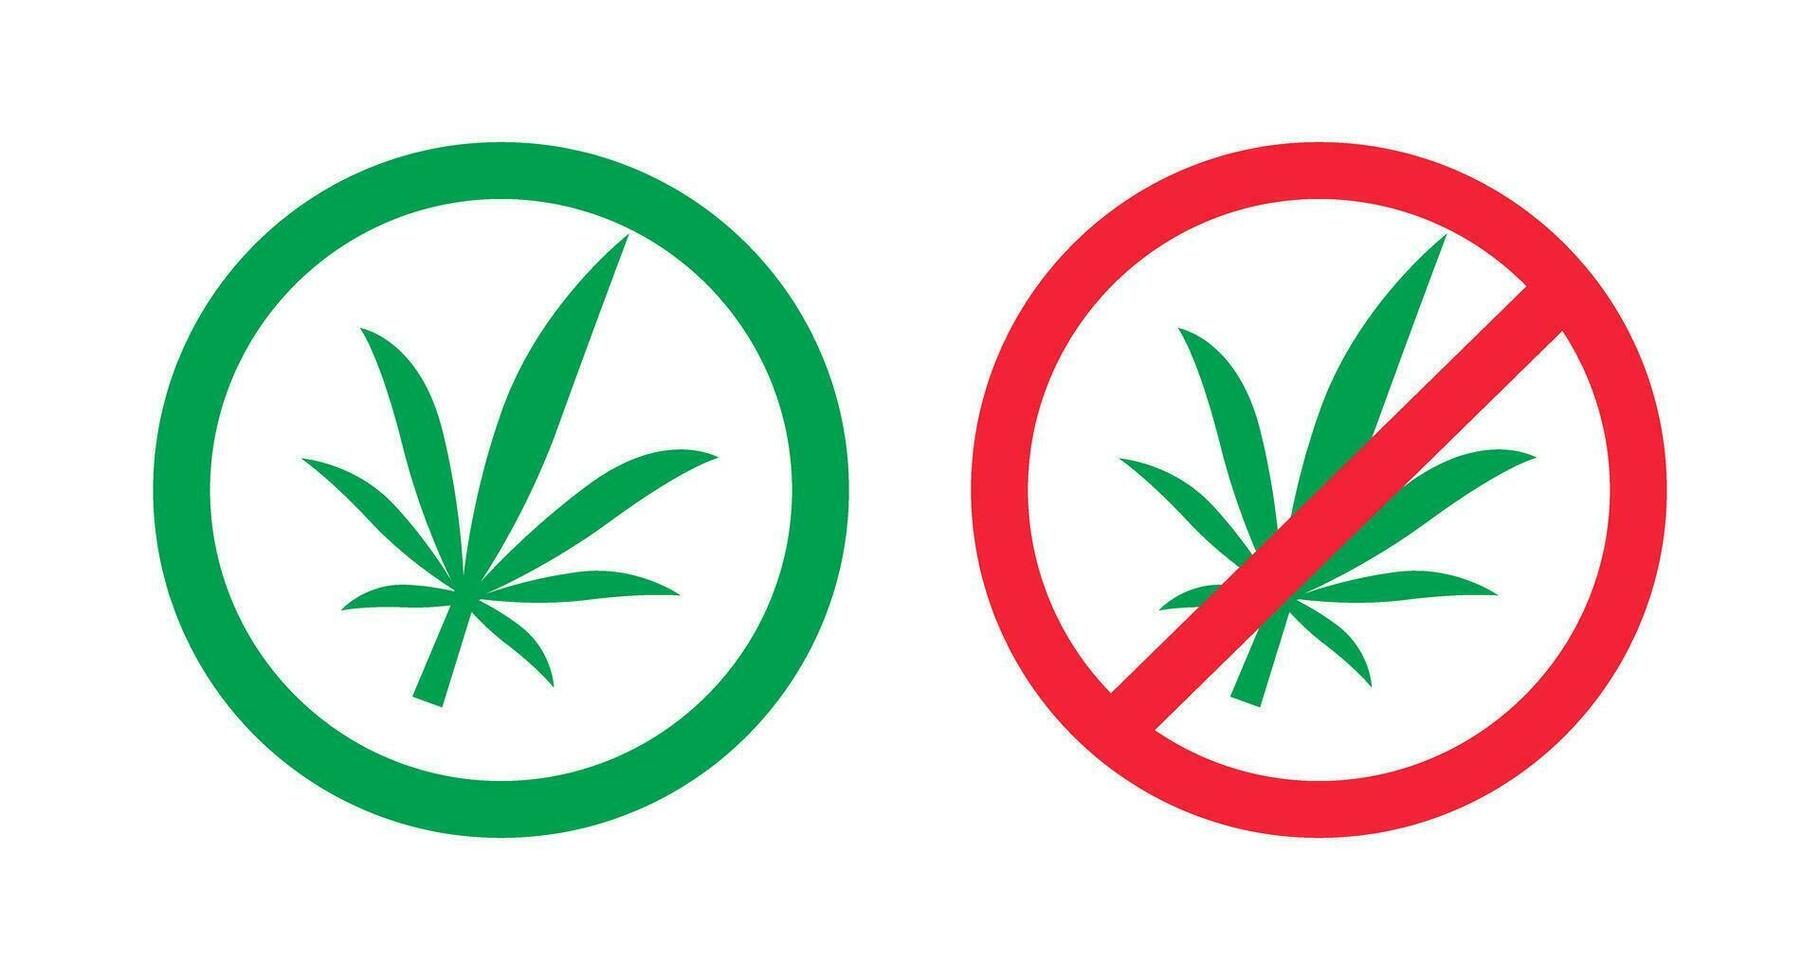 cannabis utilisation permis et cannabis utilisation interdit icône ensemble. cannabis légal et cannabis illégal. marijuana. vecteur. vecteur